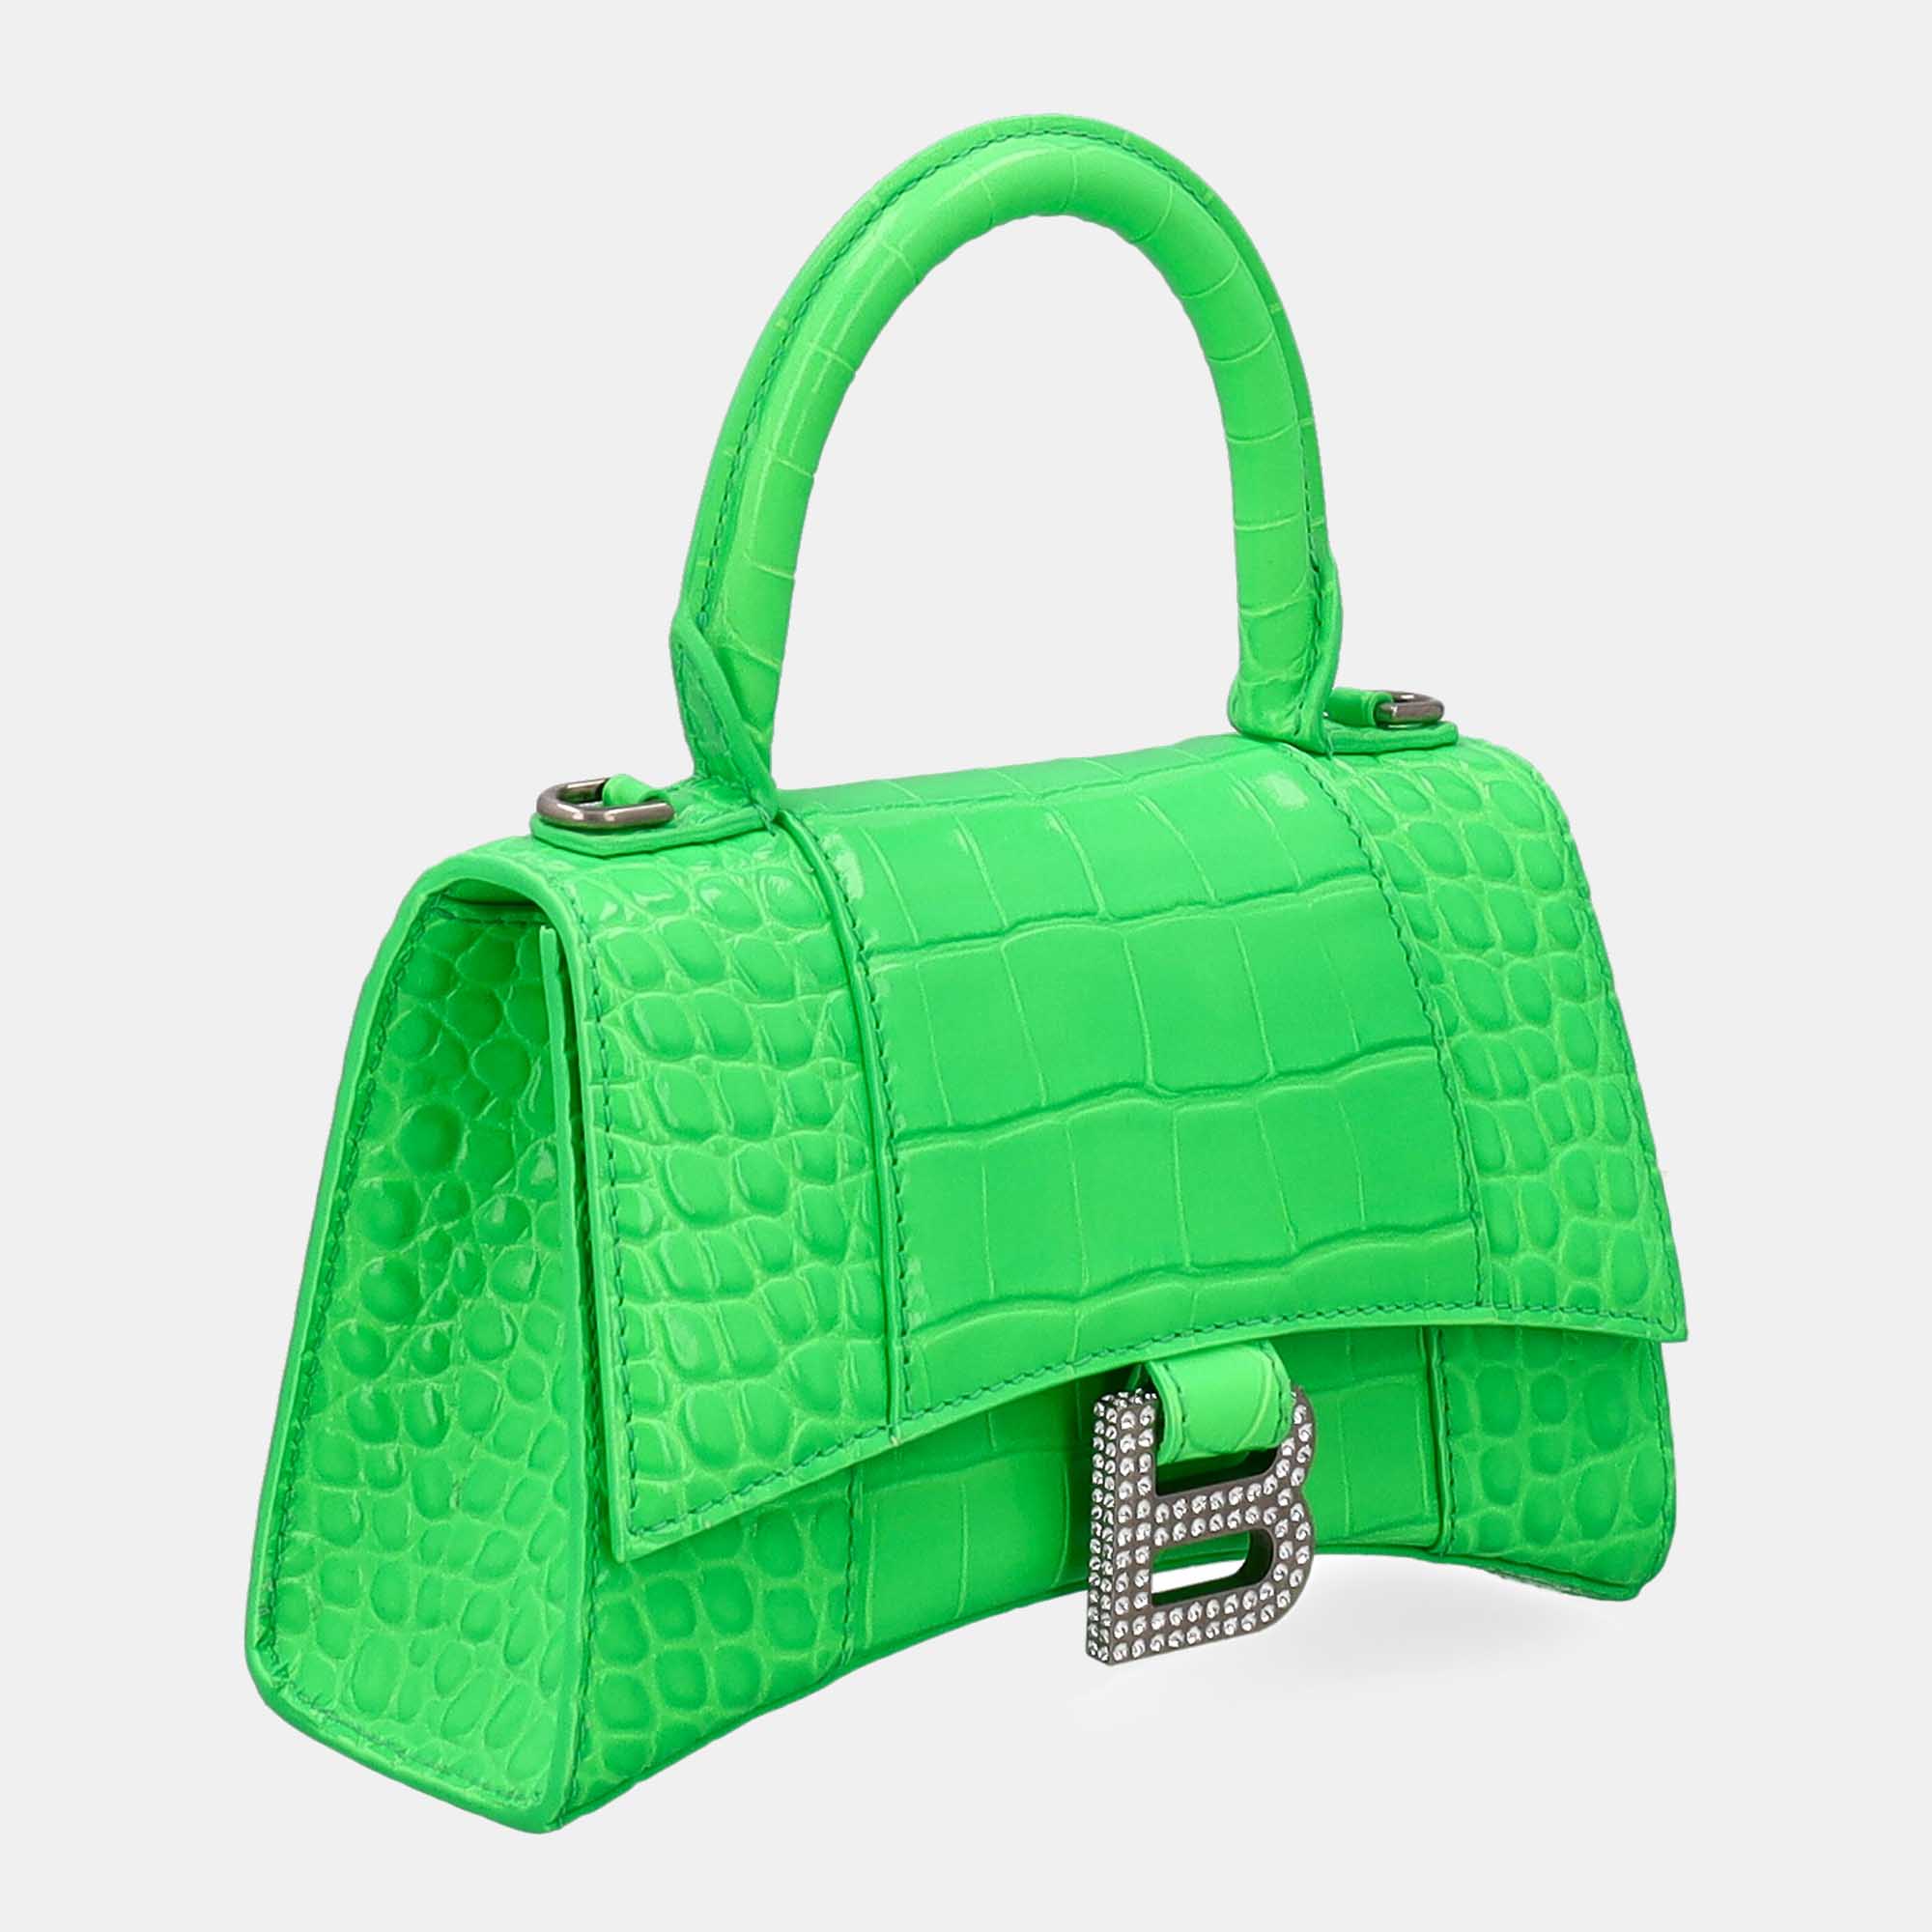 Balenciaga Hourglass Women's Leather Shoulder Bag - Green - One Size